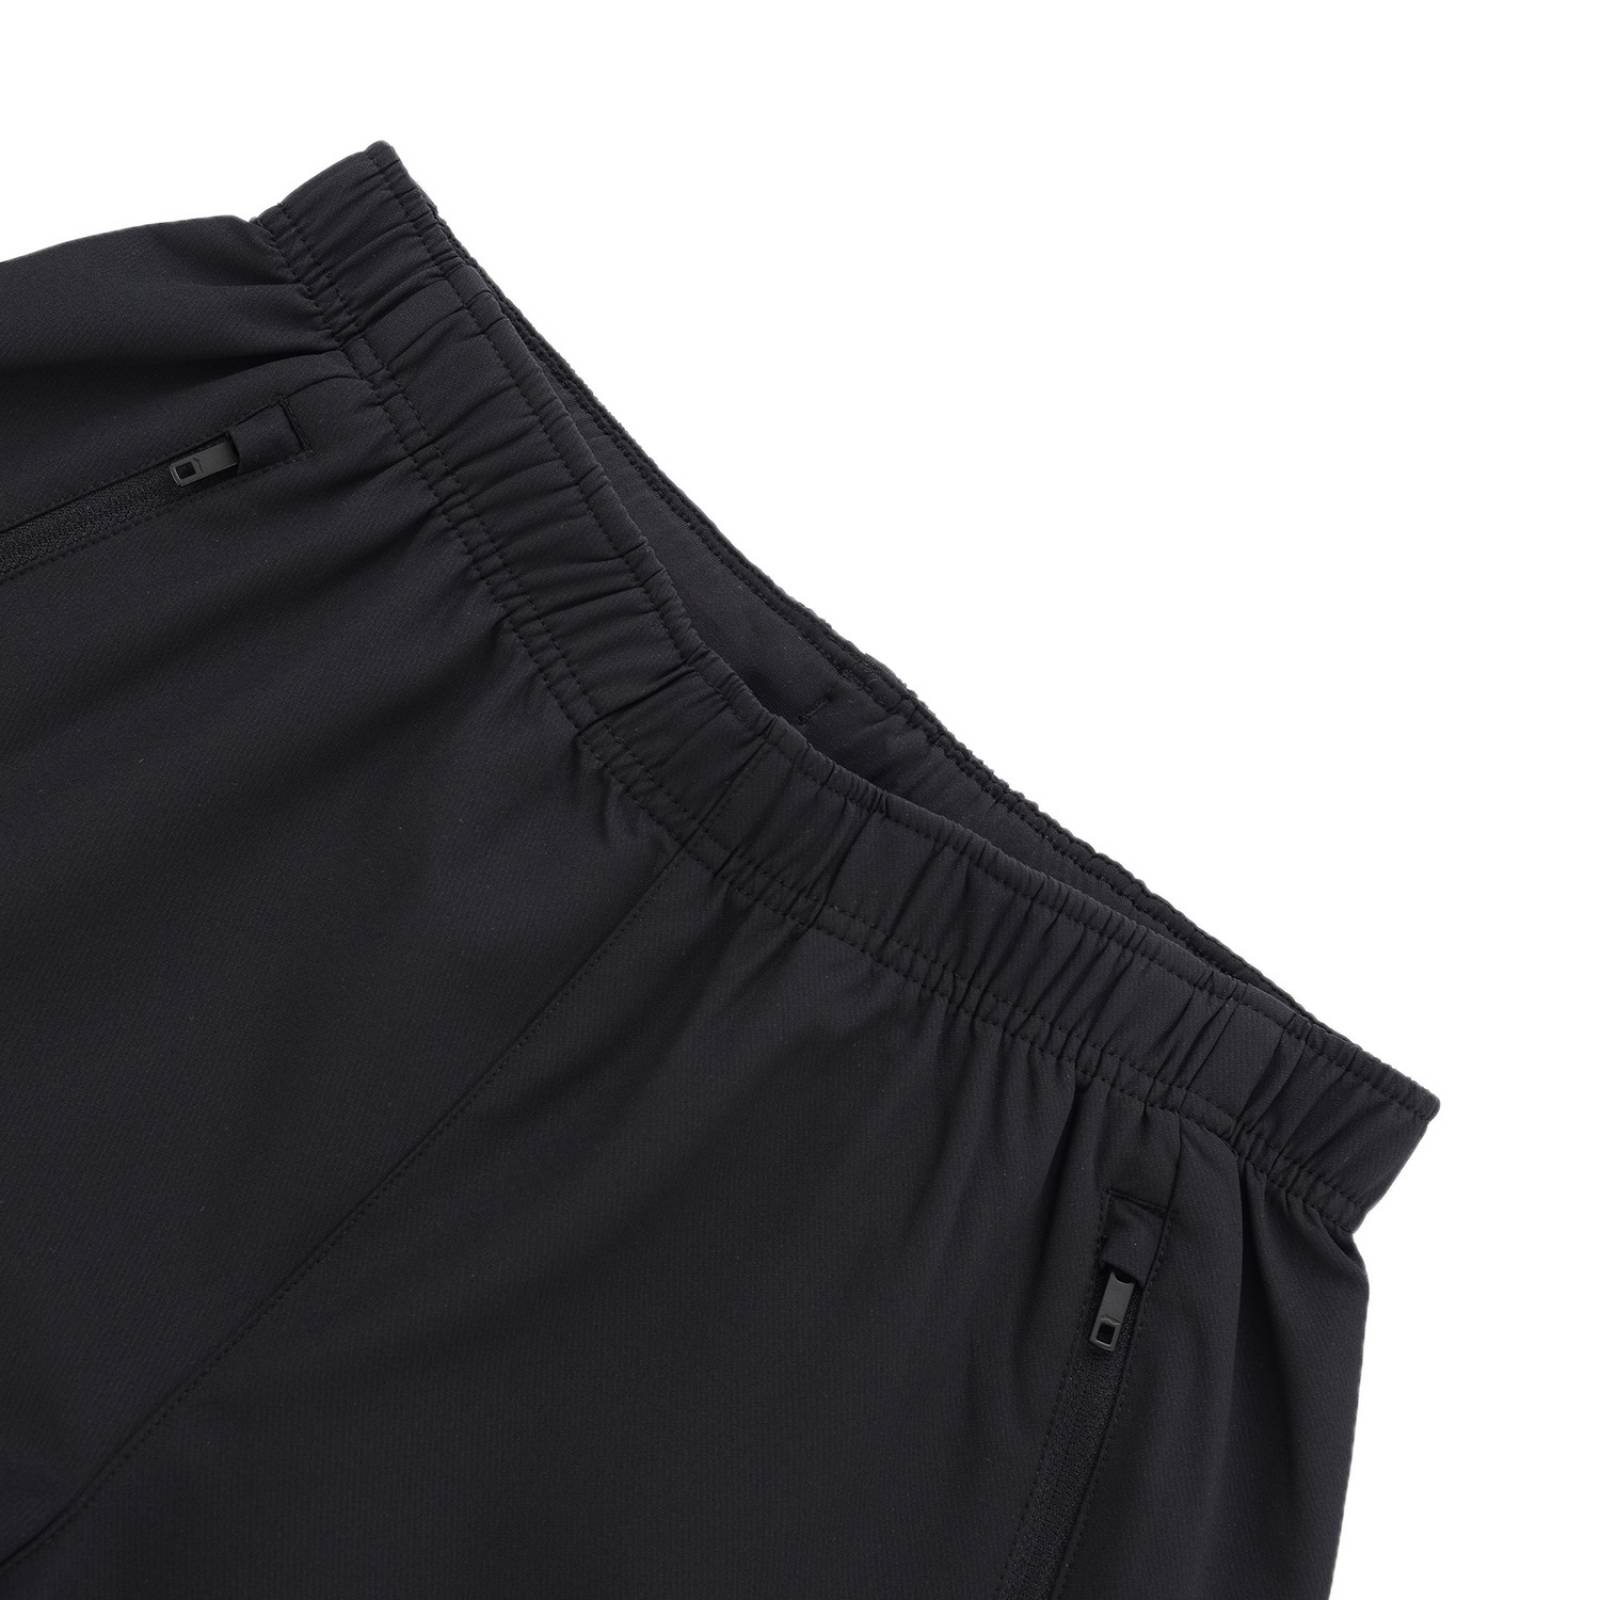 Pantalon Sport para Correr AYKN389-1 Negro Li-Ning Caballero